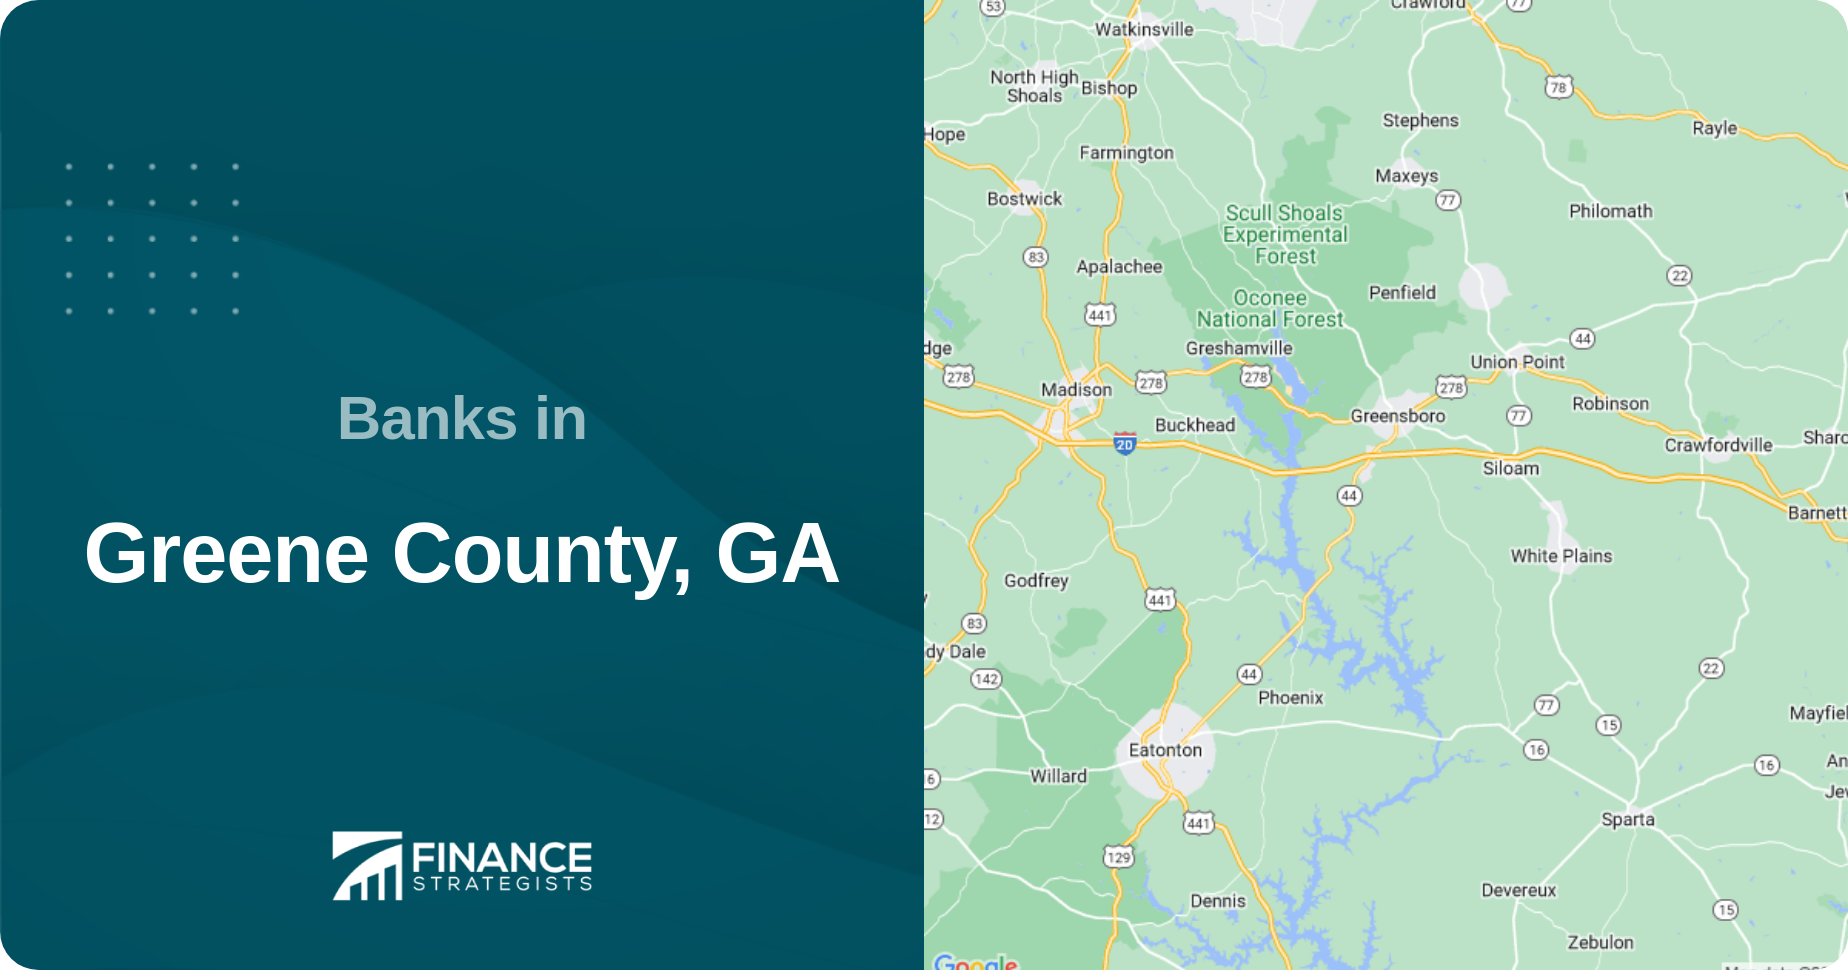 Banks in Greene County, GA